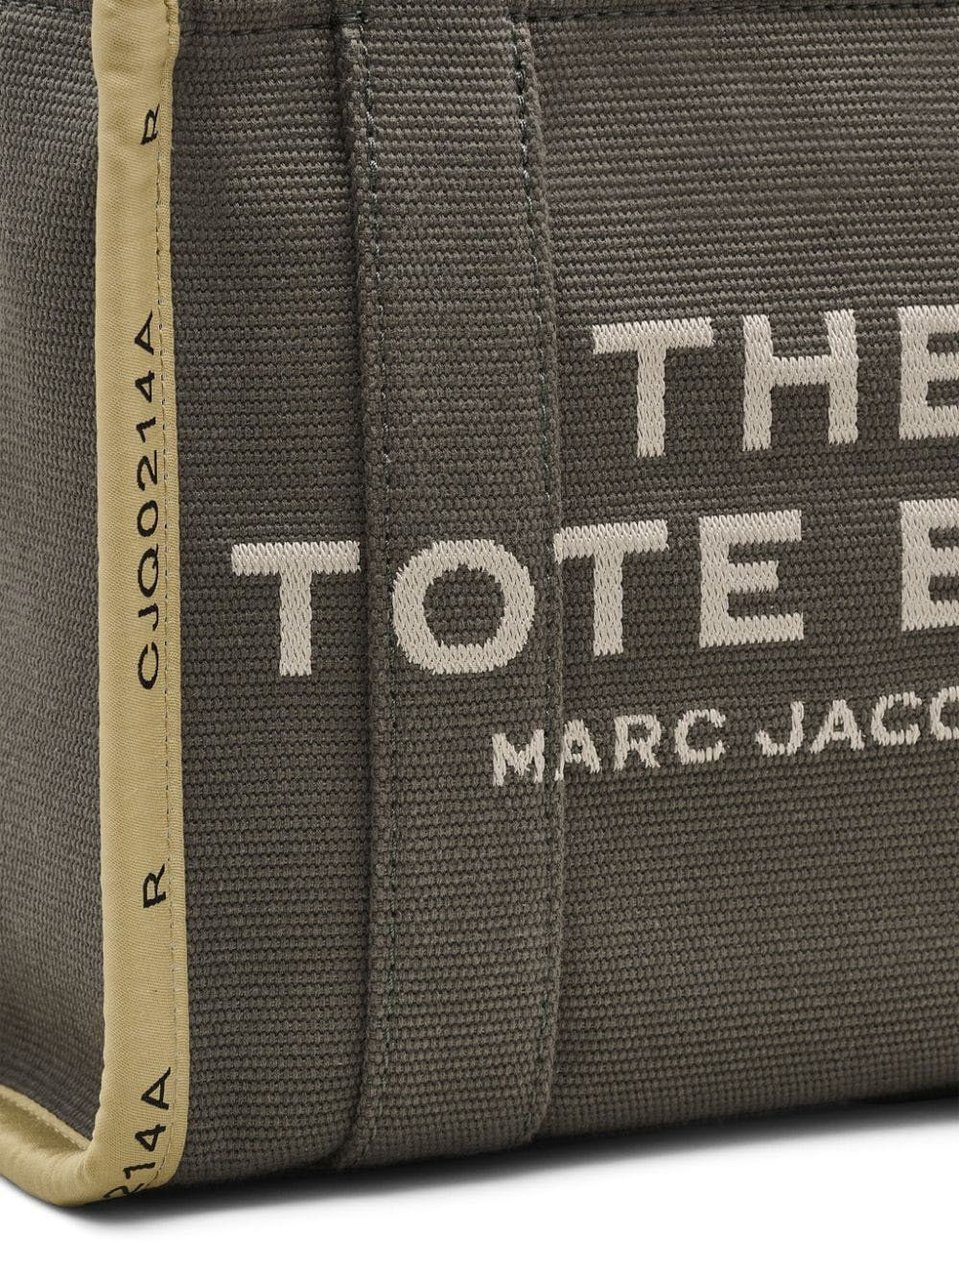 Marc Jacobs The Jacquard Small Tote Bronze Green Handbag Green Groen